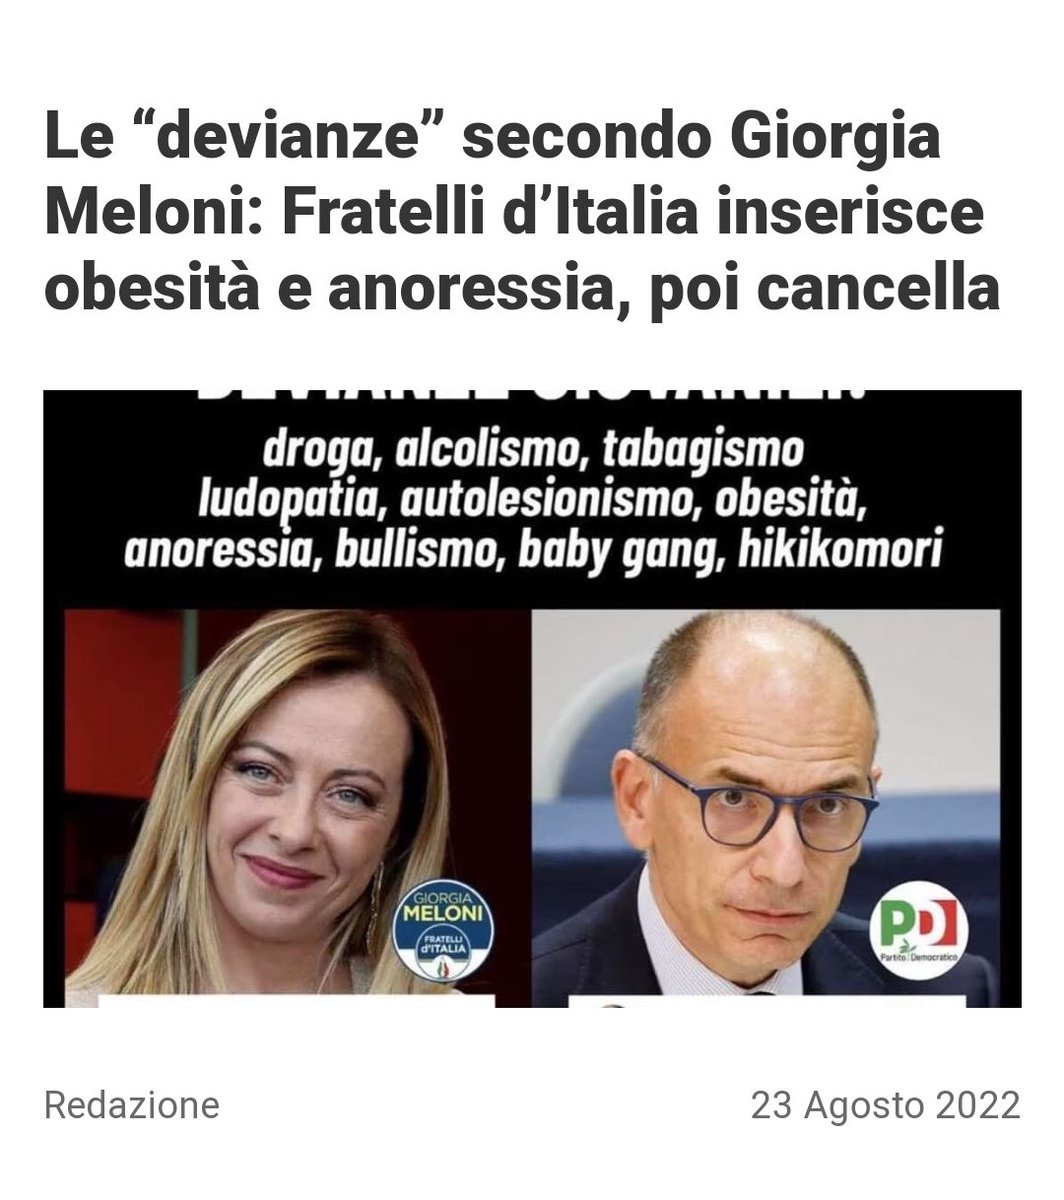 @GiorgiaMeloni #Melonifaischifo 
#MeloniVergogna
#Iononvotogiorgia